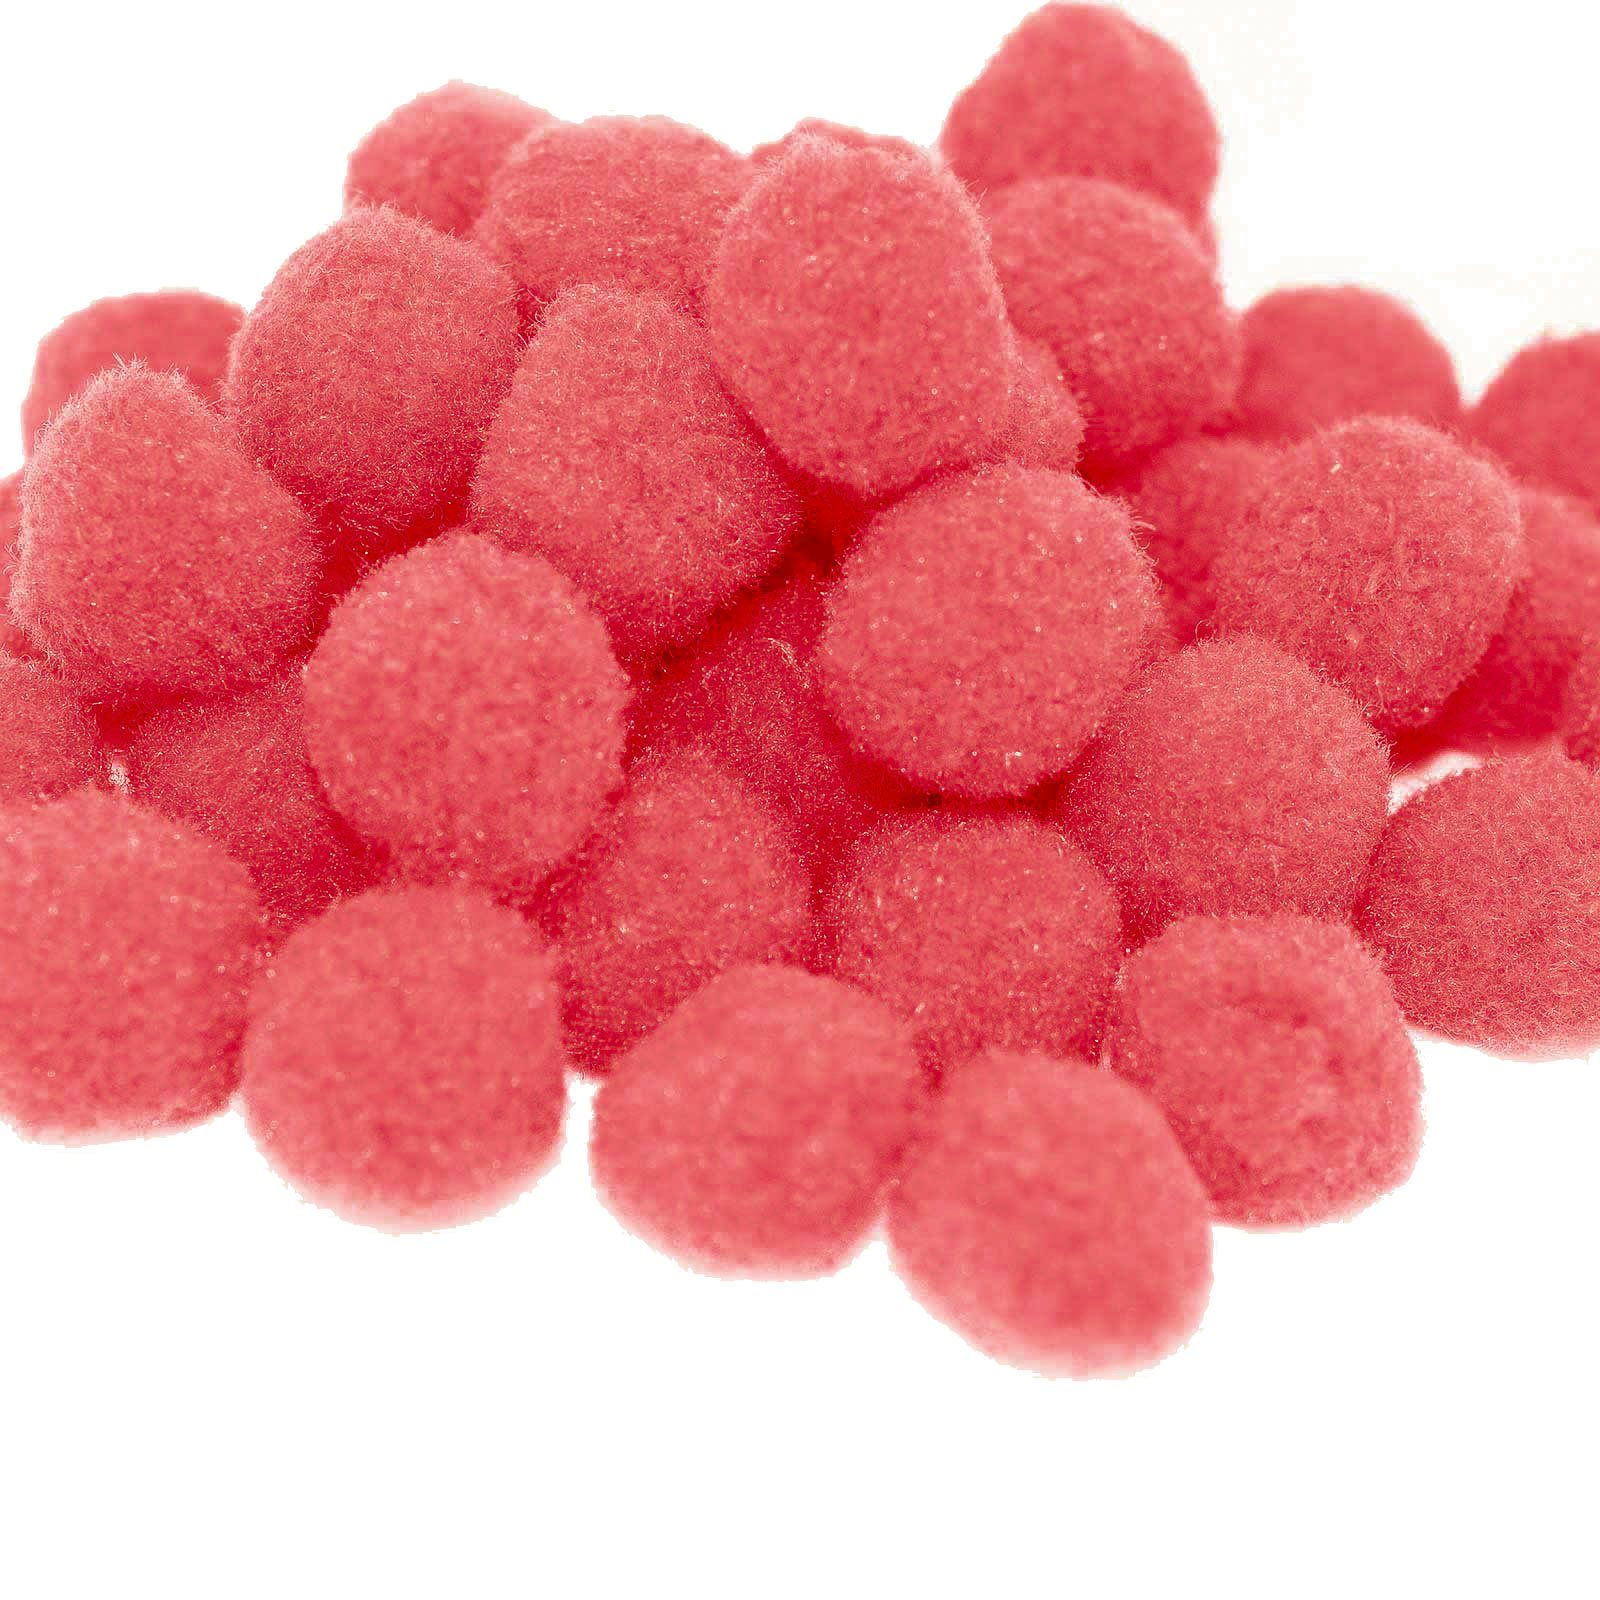 maDDma Pompon 100 Pompons, 15mm, kreativ zum Basteln, Farben oder Farbmix, pink